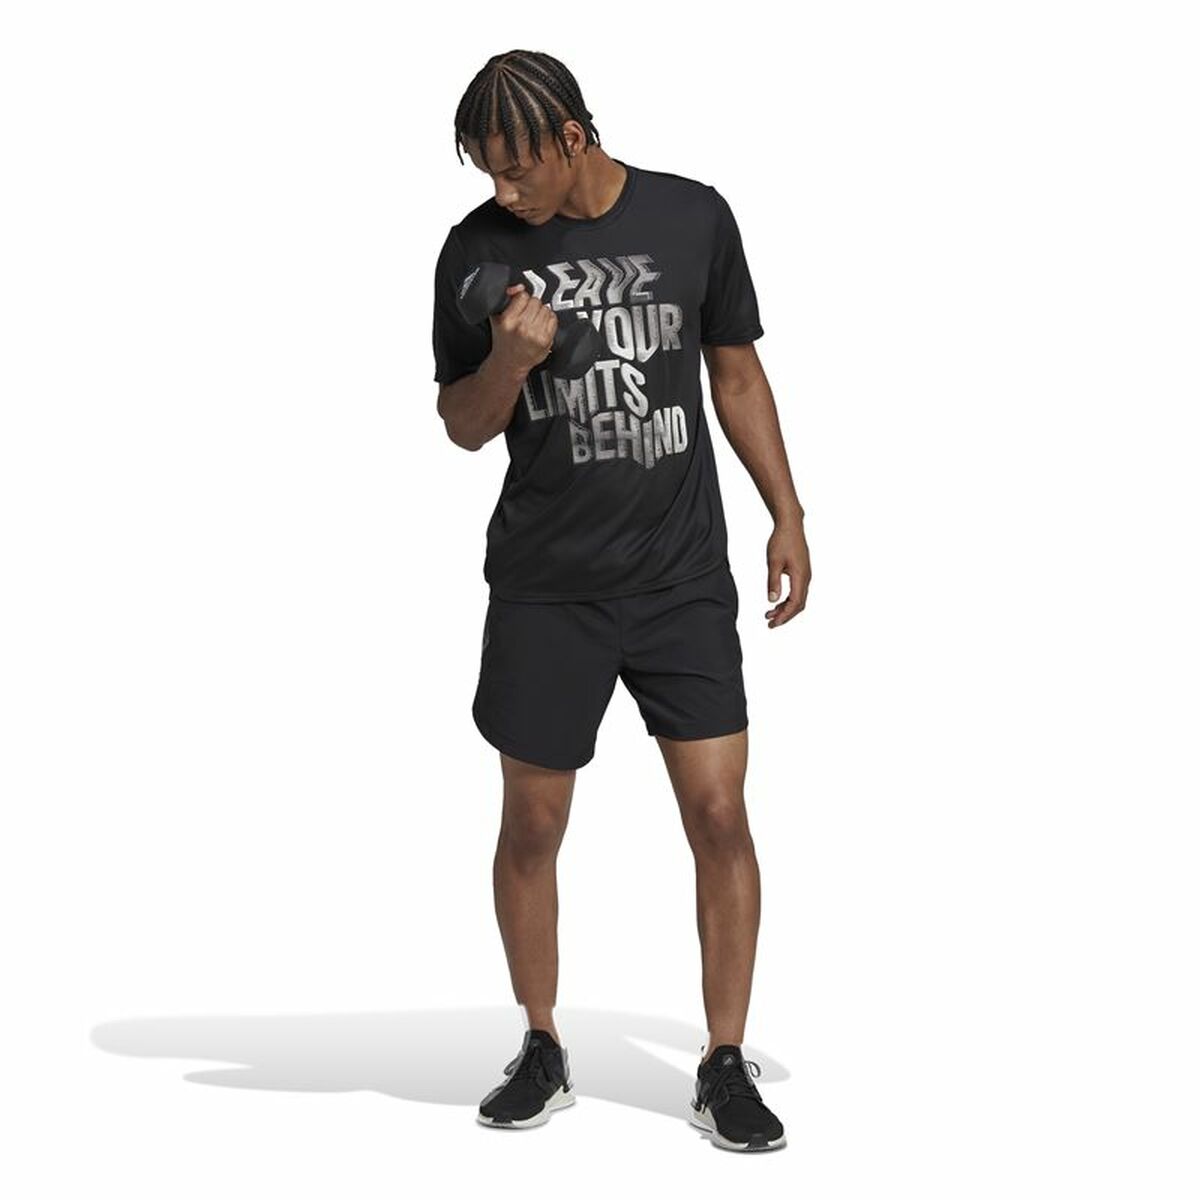 Men's Sports Shorts Adidas Hiit Movement  Black 7"